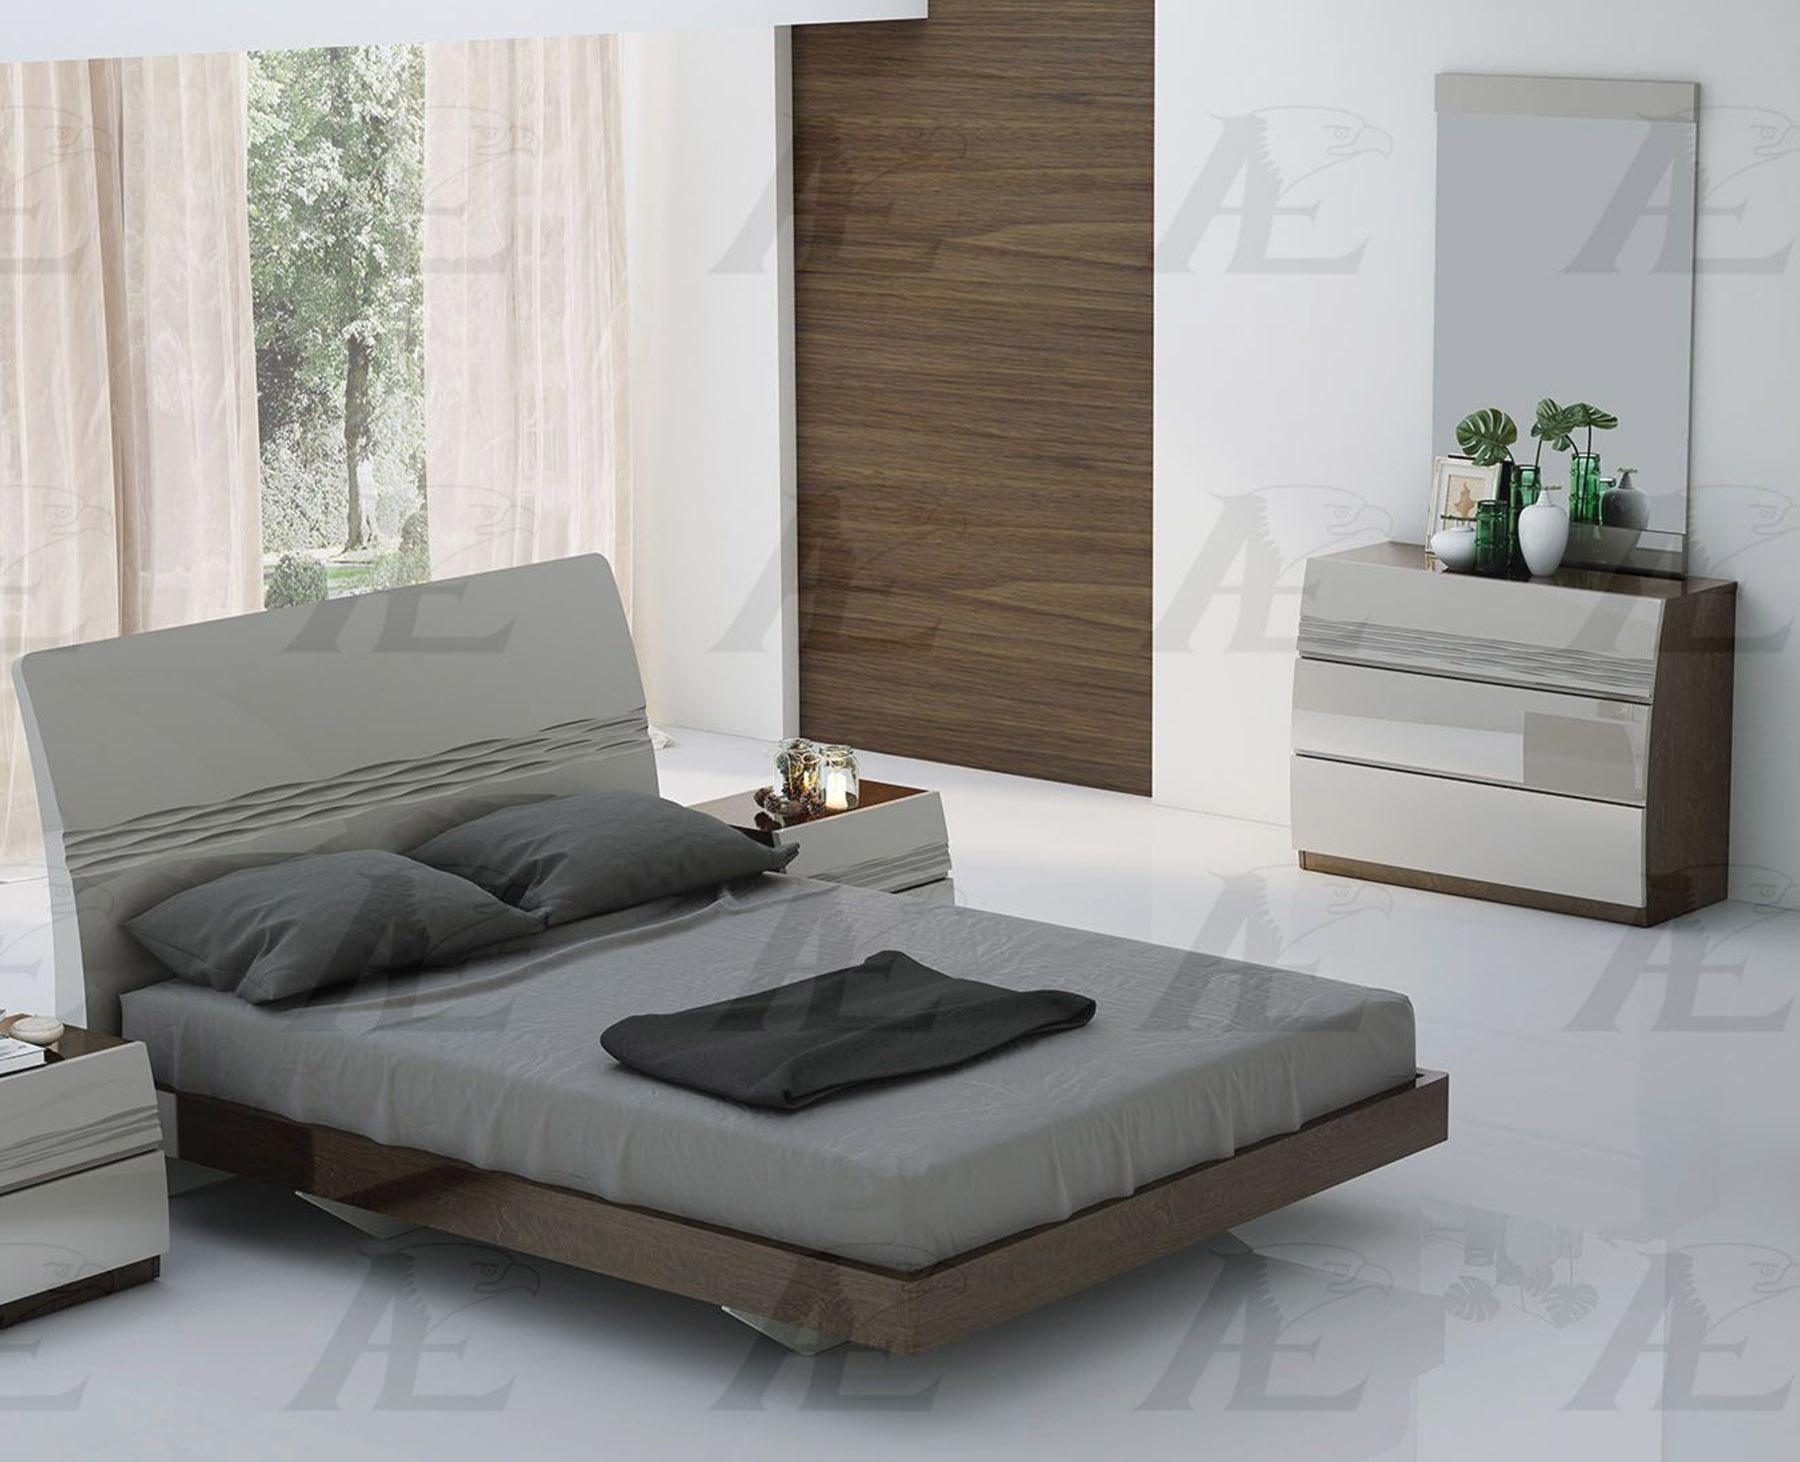 

    
American Eagle Furniture B-P102-EK Platform Bed Light Gray/Brown B-P102-EK
